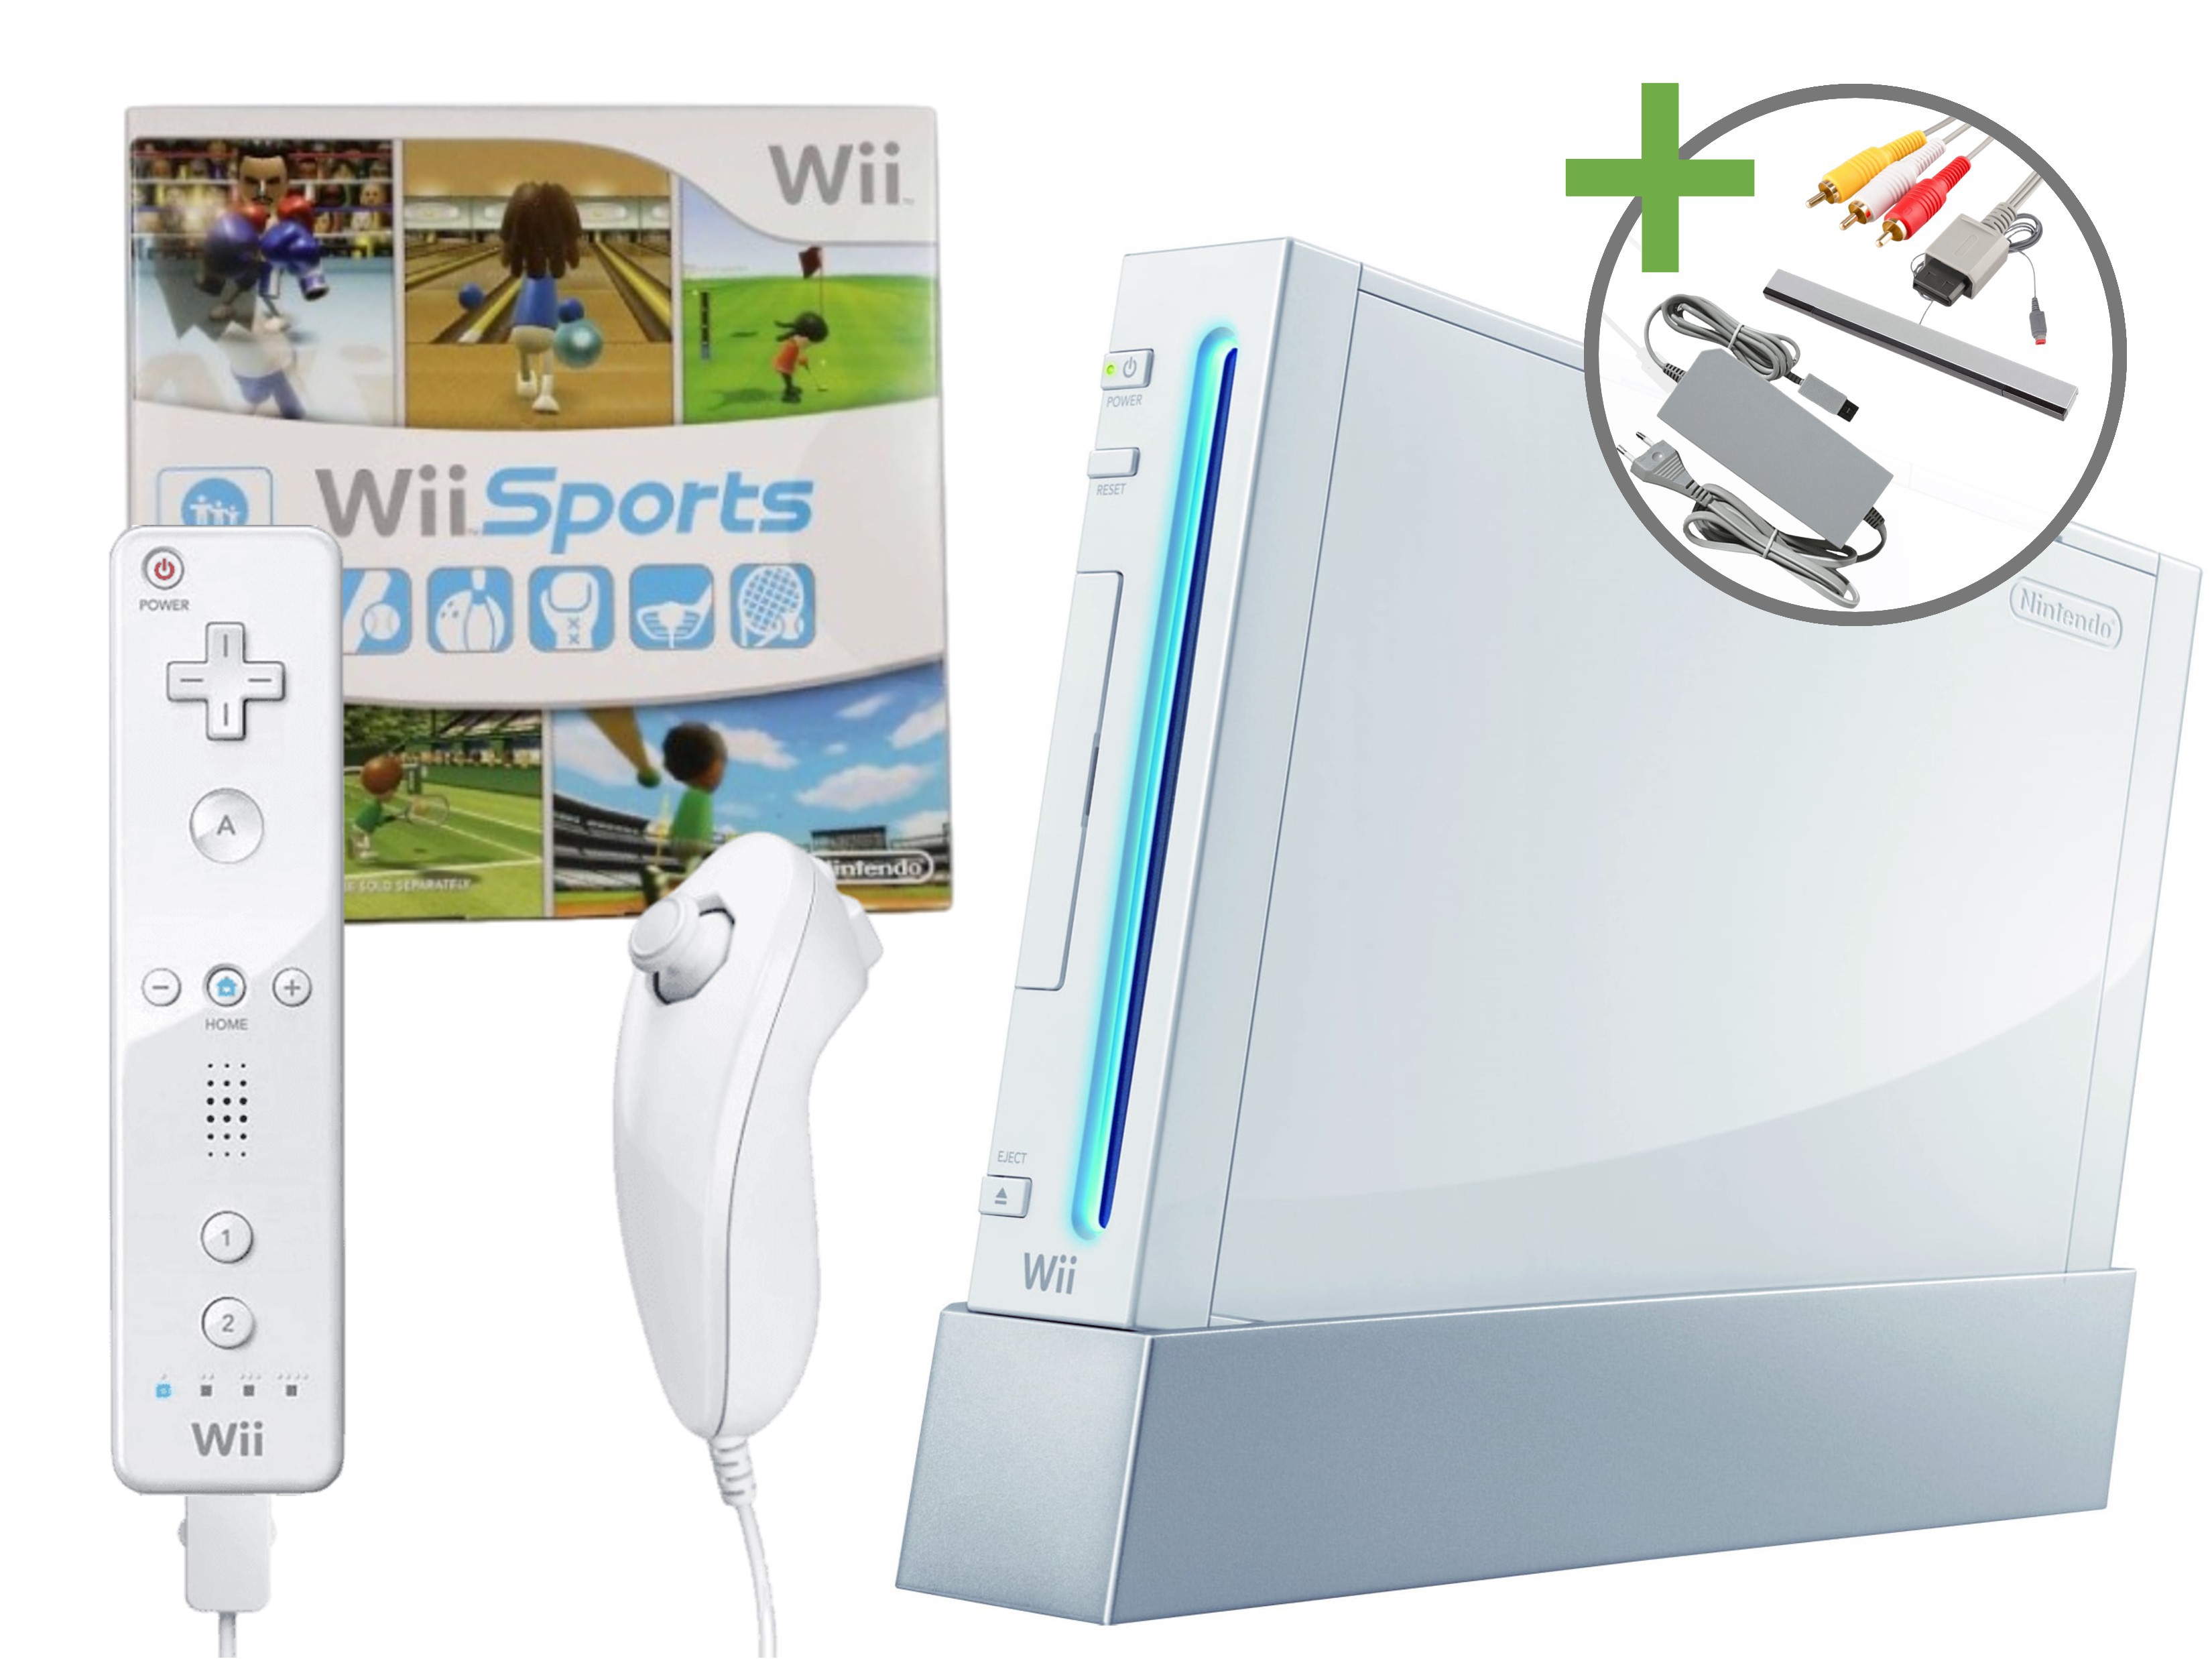 Nintendo Wii Starter Pack - Wii Sports Edition [Complete] - Wii Hardware - 2